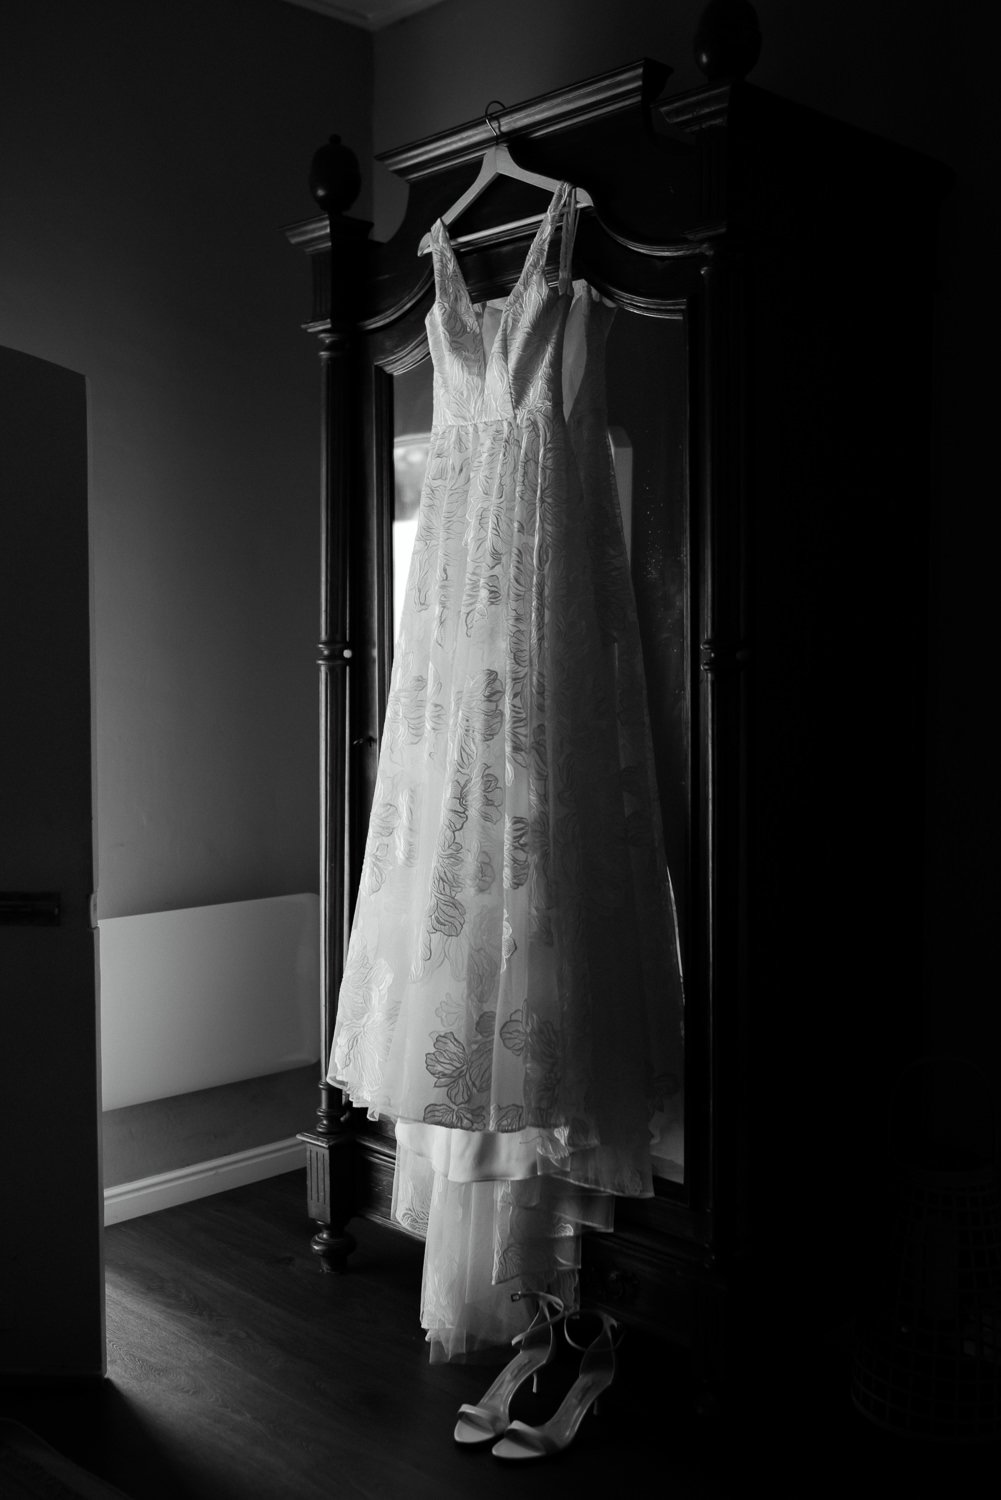 Bride's Dress - Getting Ready for wedding - Wedding Photography by Mark Hadden Amsterdam